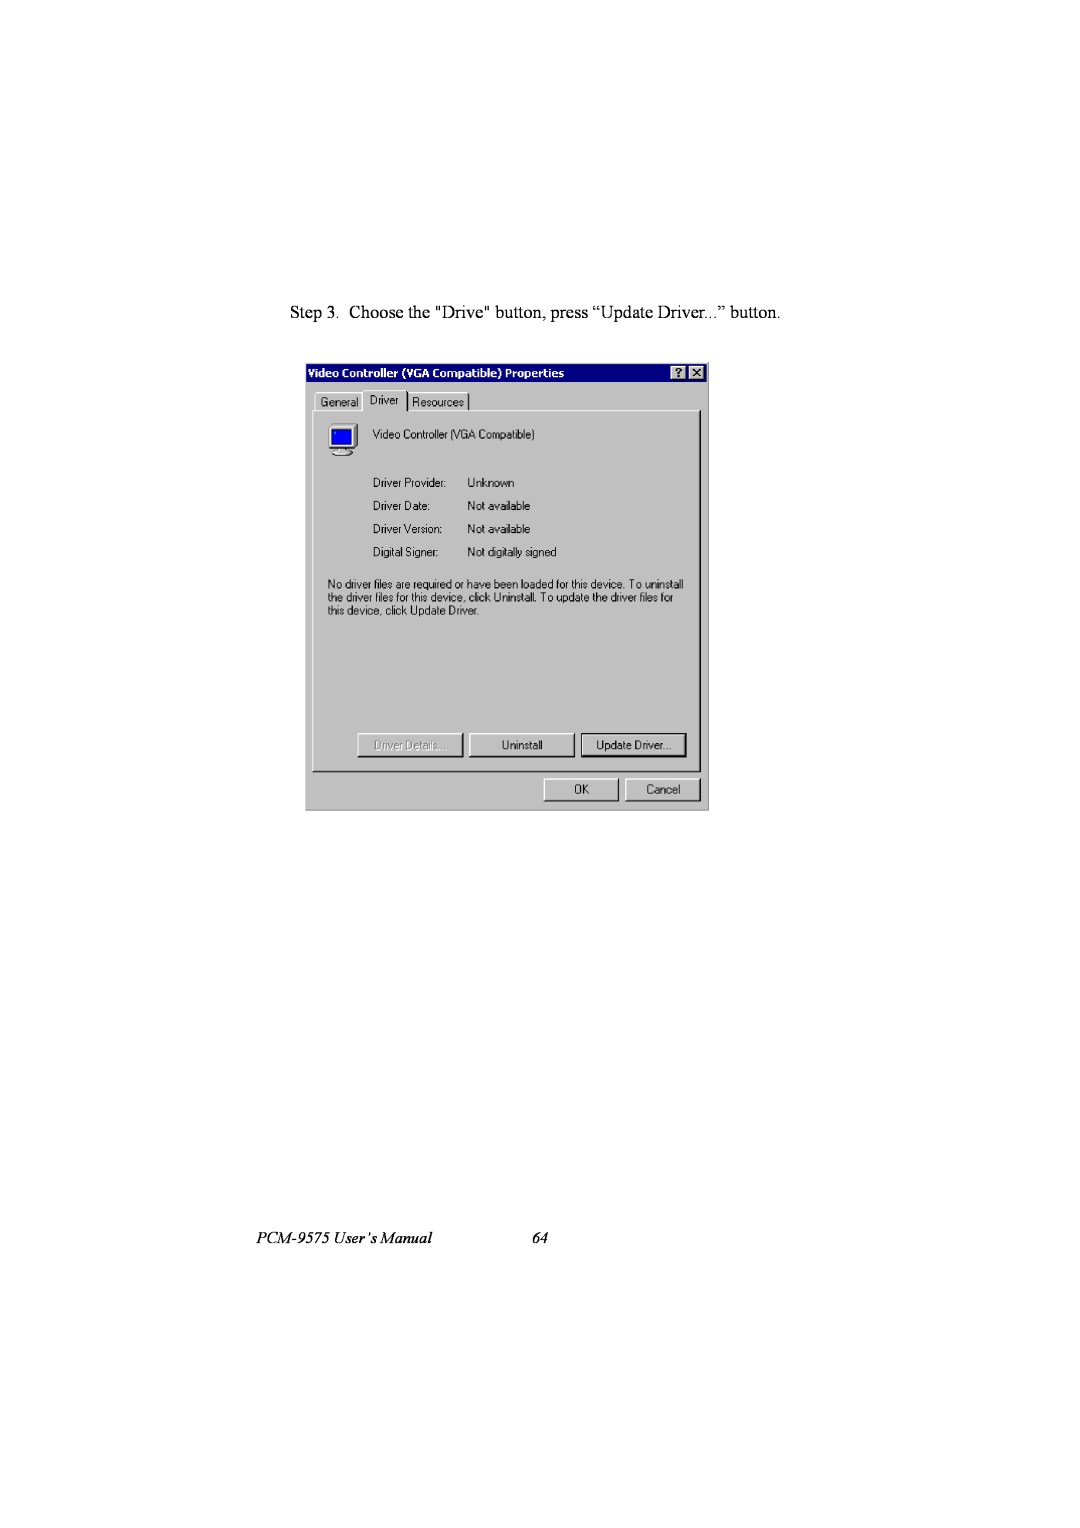 IBM 100/10 user manual Choose the Drive button, press “Update Driver...” button, PCM-9575 User’s Manual 